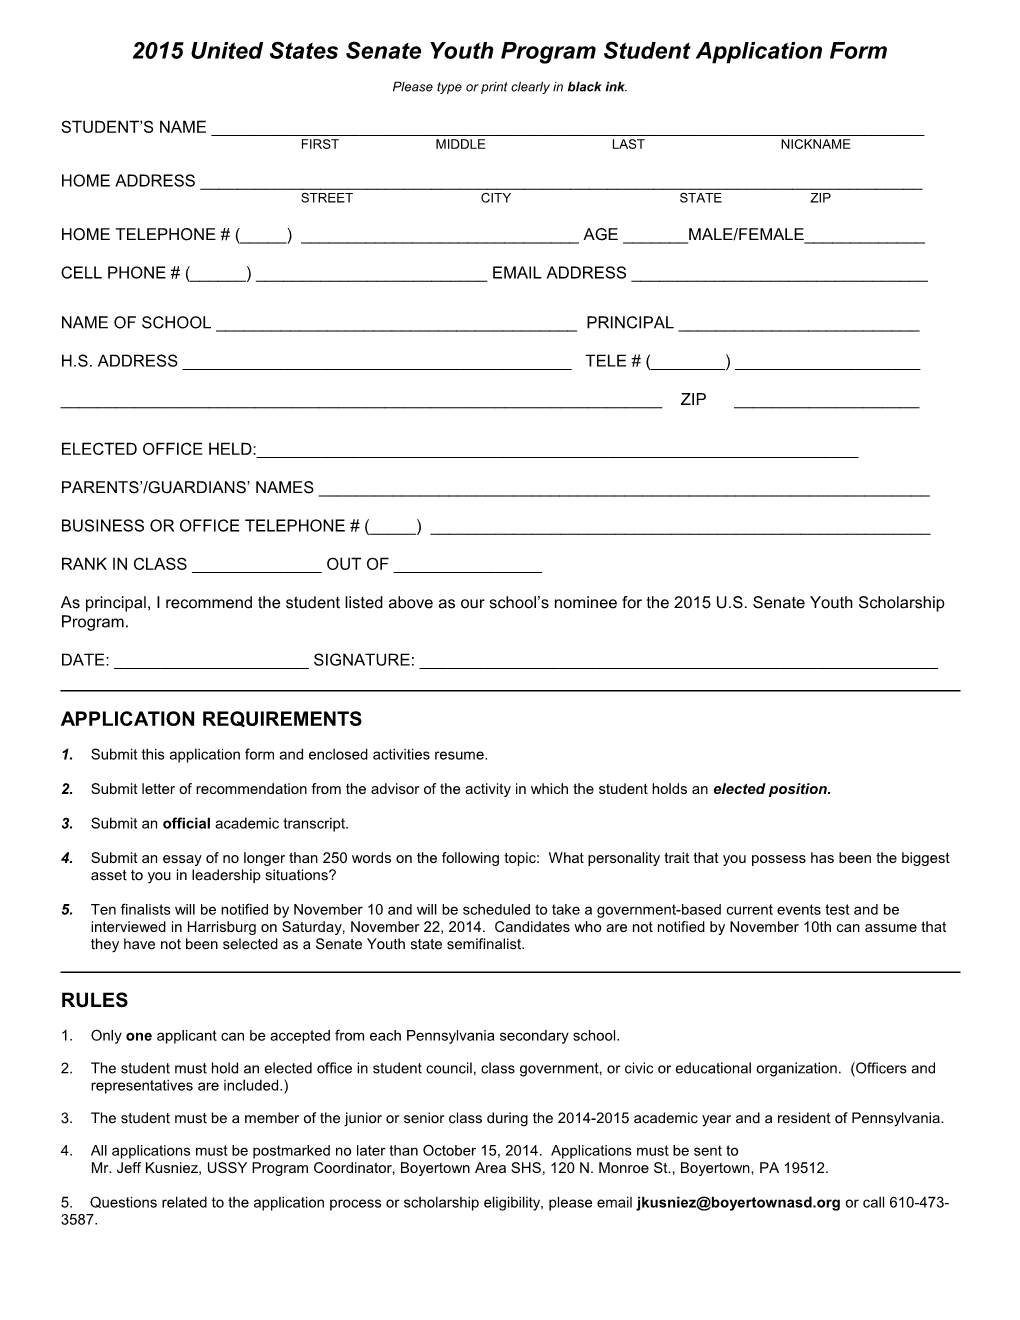 2011 United States Senate Youth Program Student Application Form